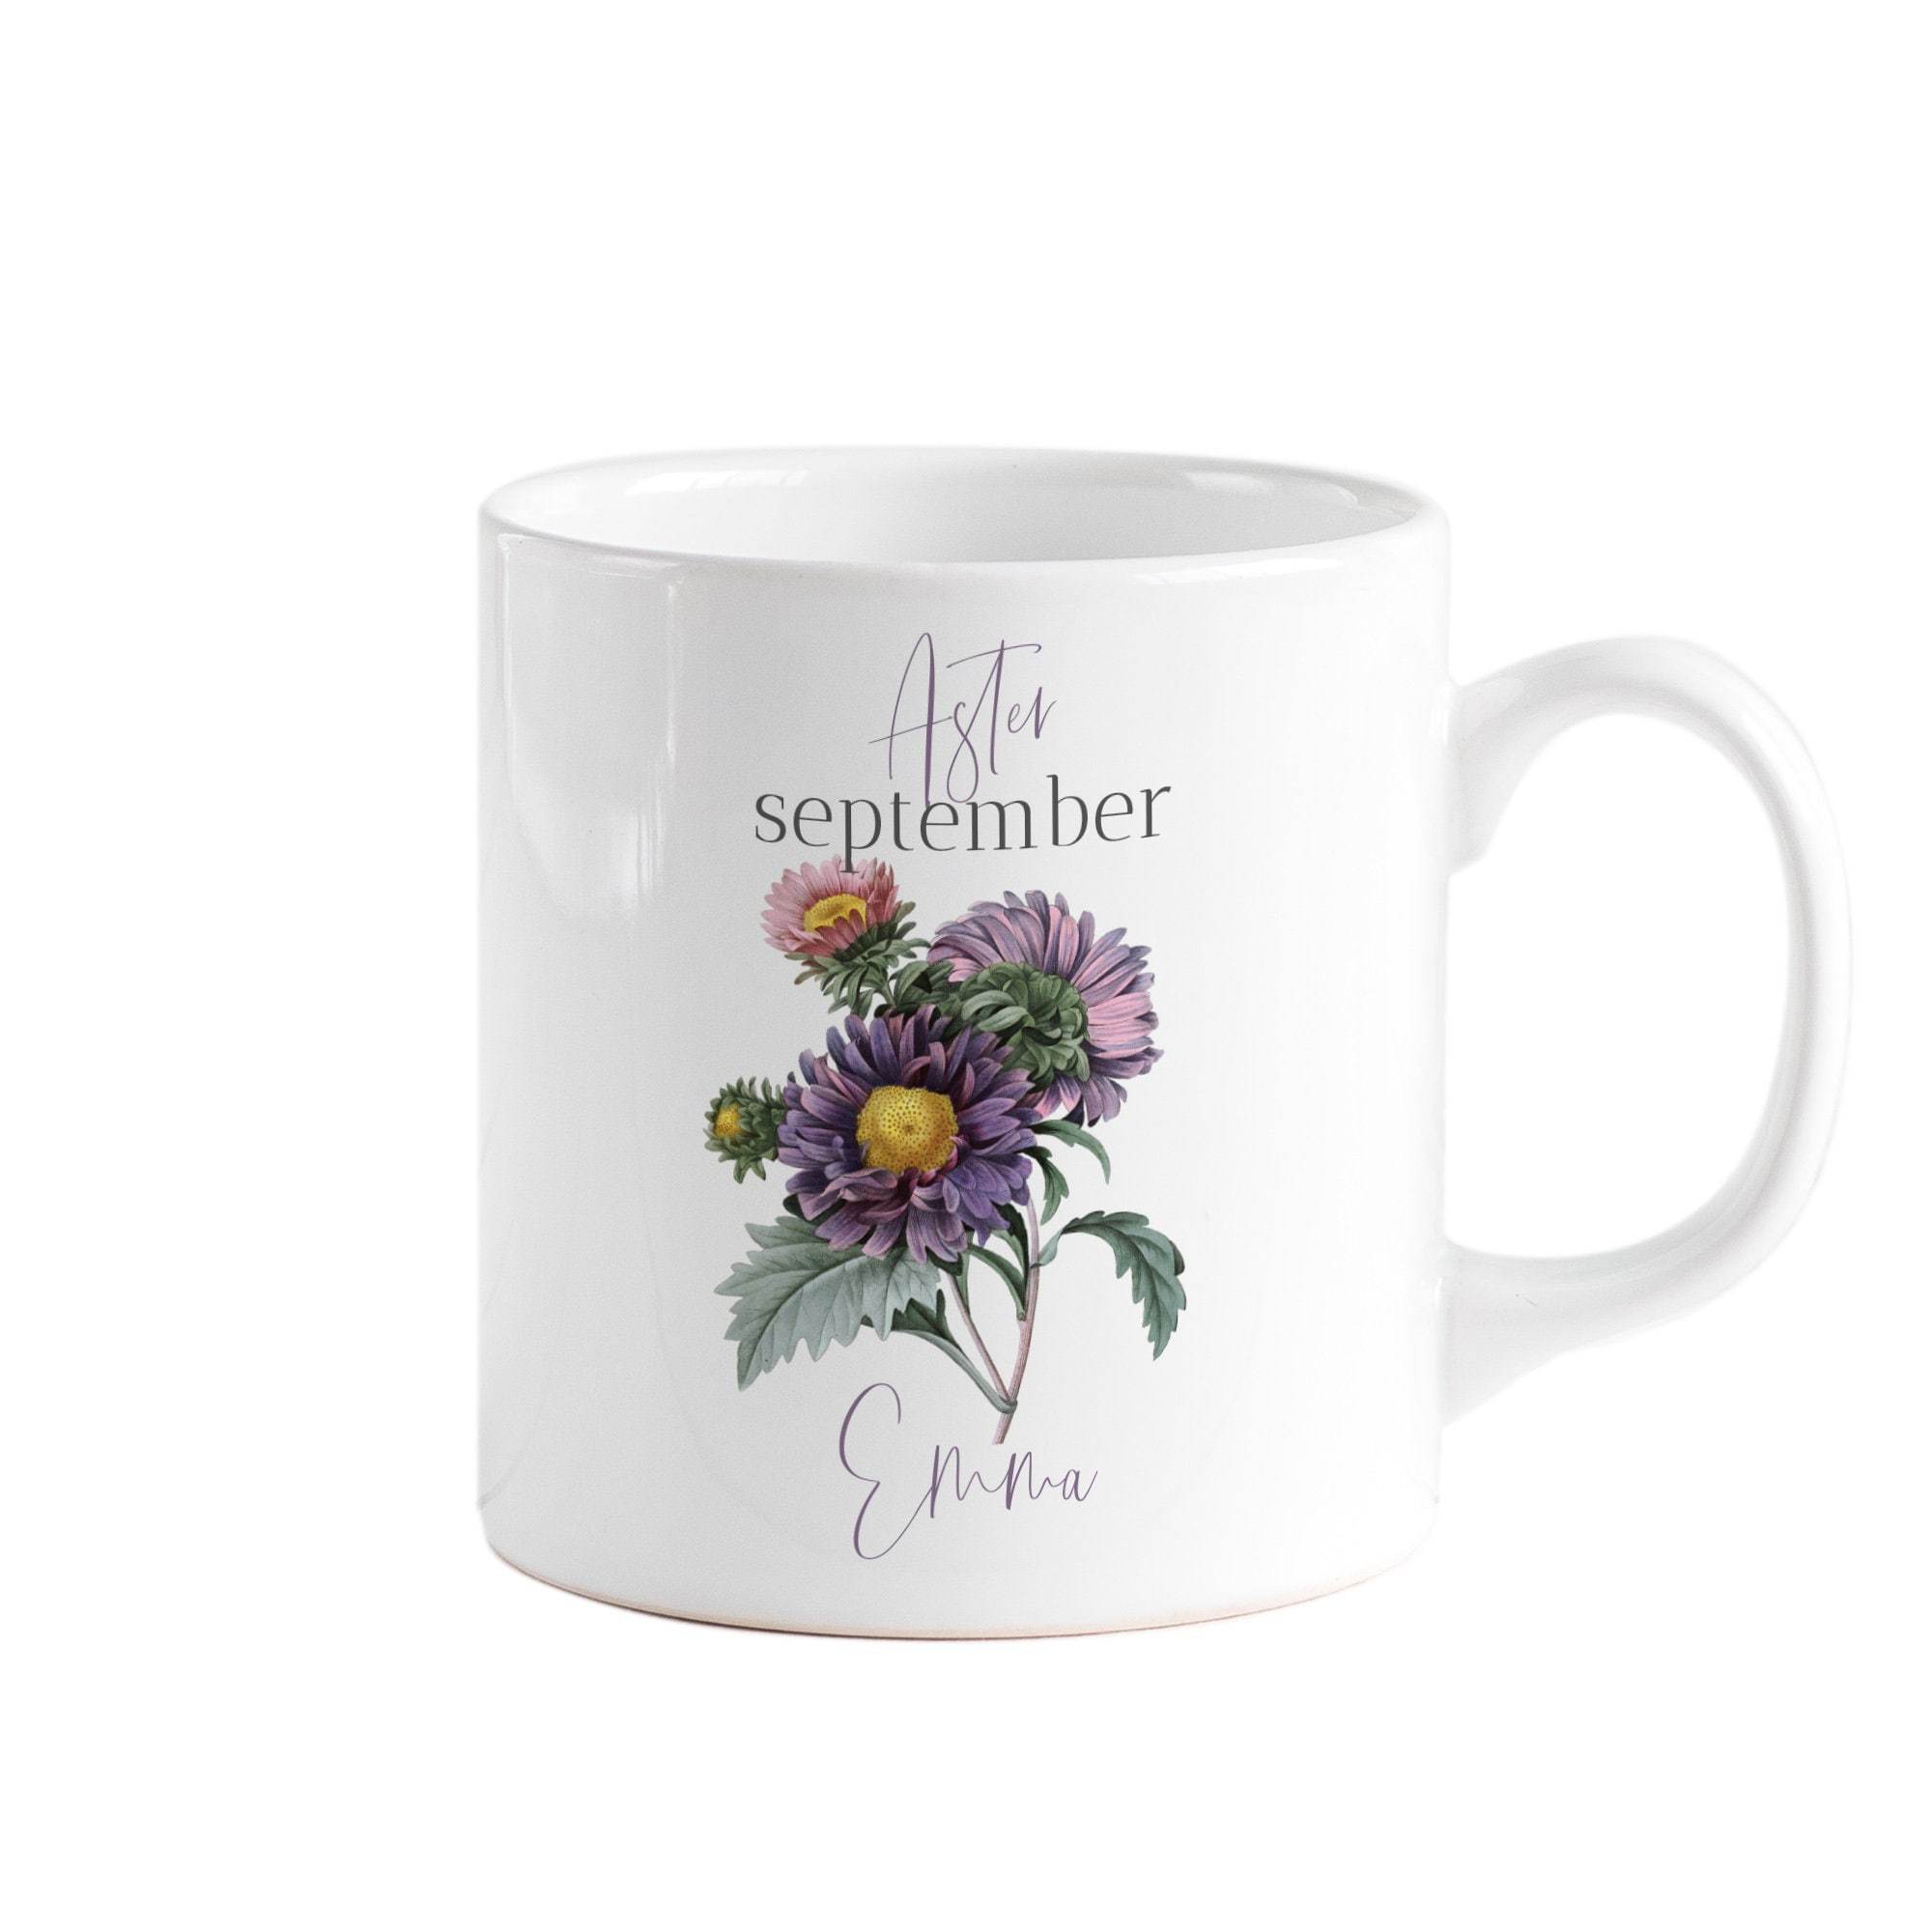 Personalised birth flower mug, September birth flower aster, Floral design birthday gift